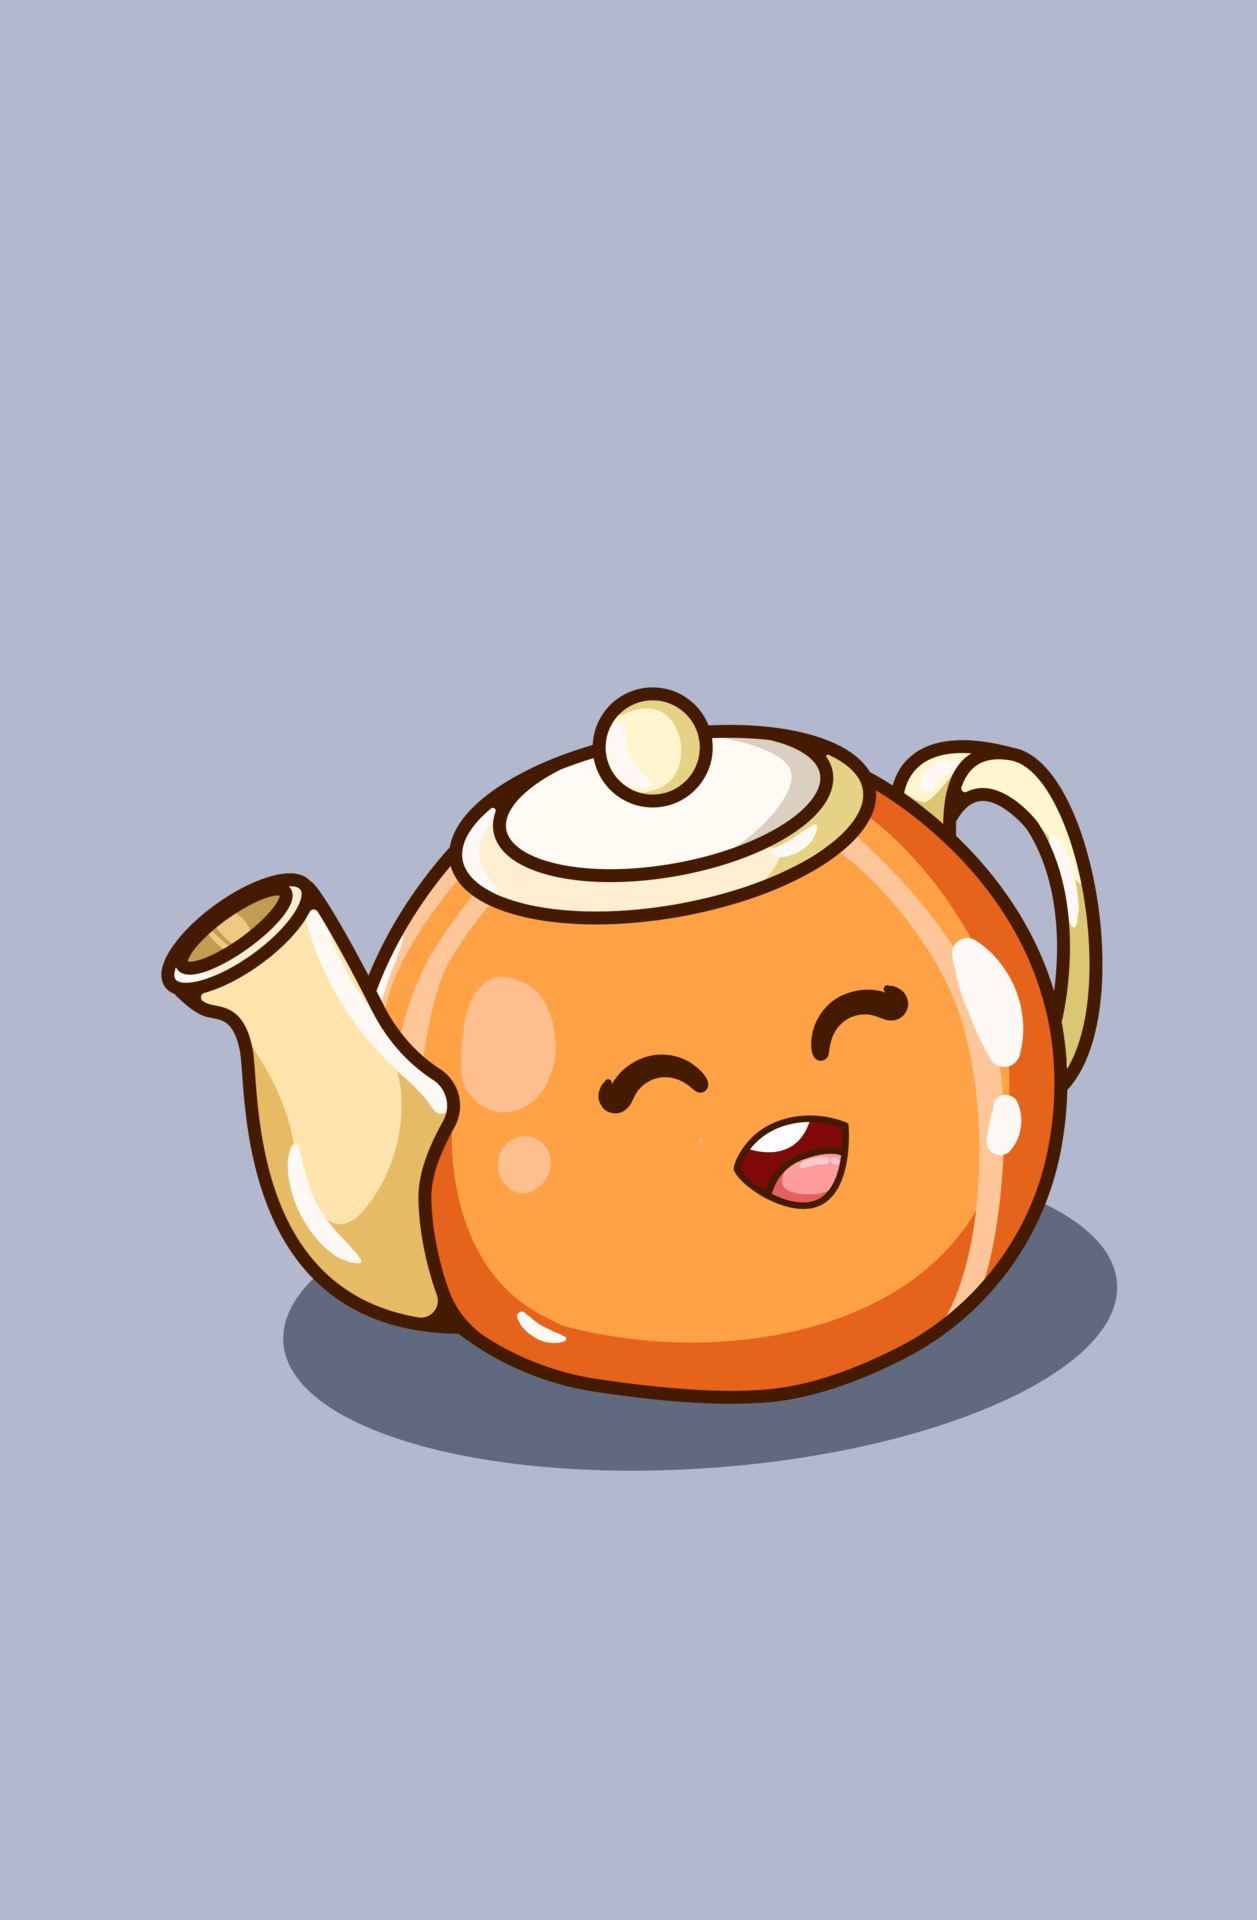 https://static.vecteezy.com/system/resources/previews/002/151/497/original/cute-gold-teapot-cartoon-illustration-vector.jpg